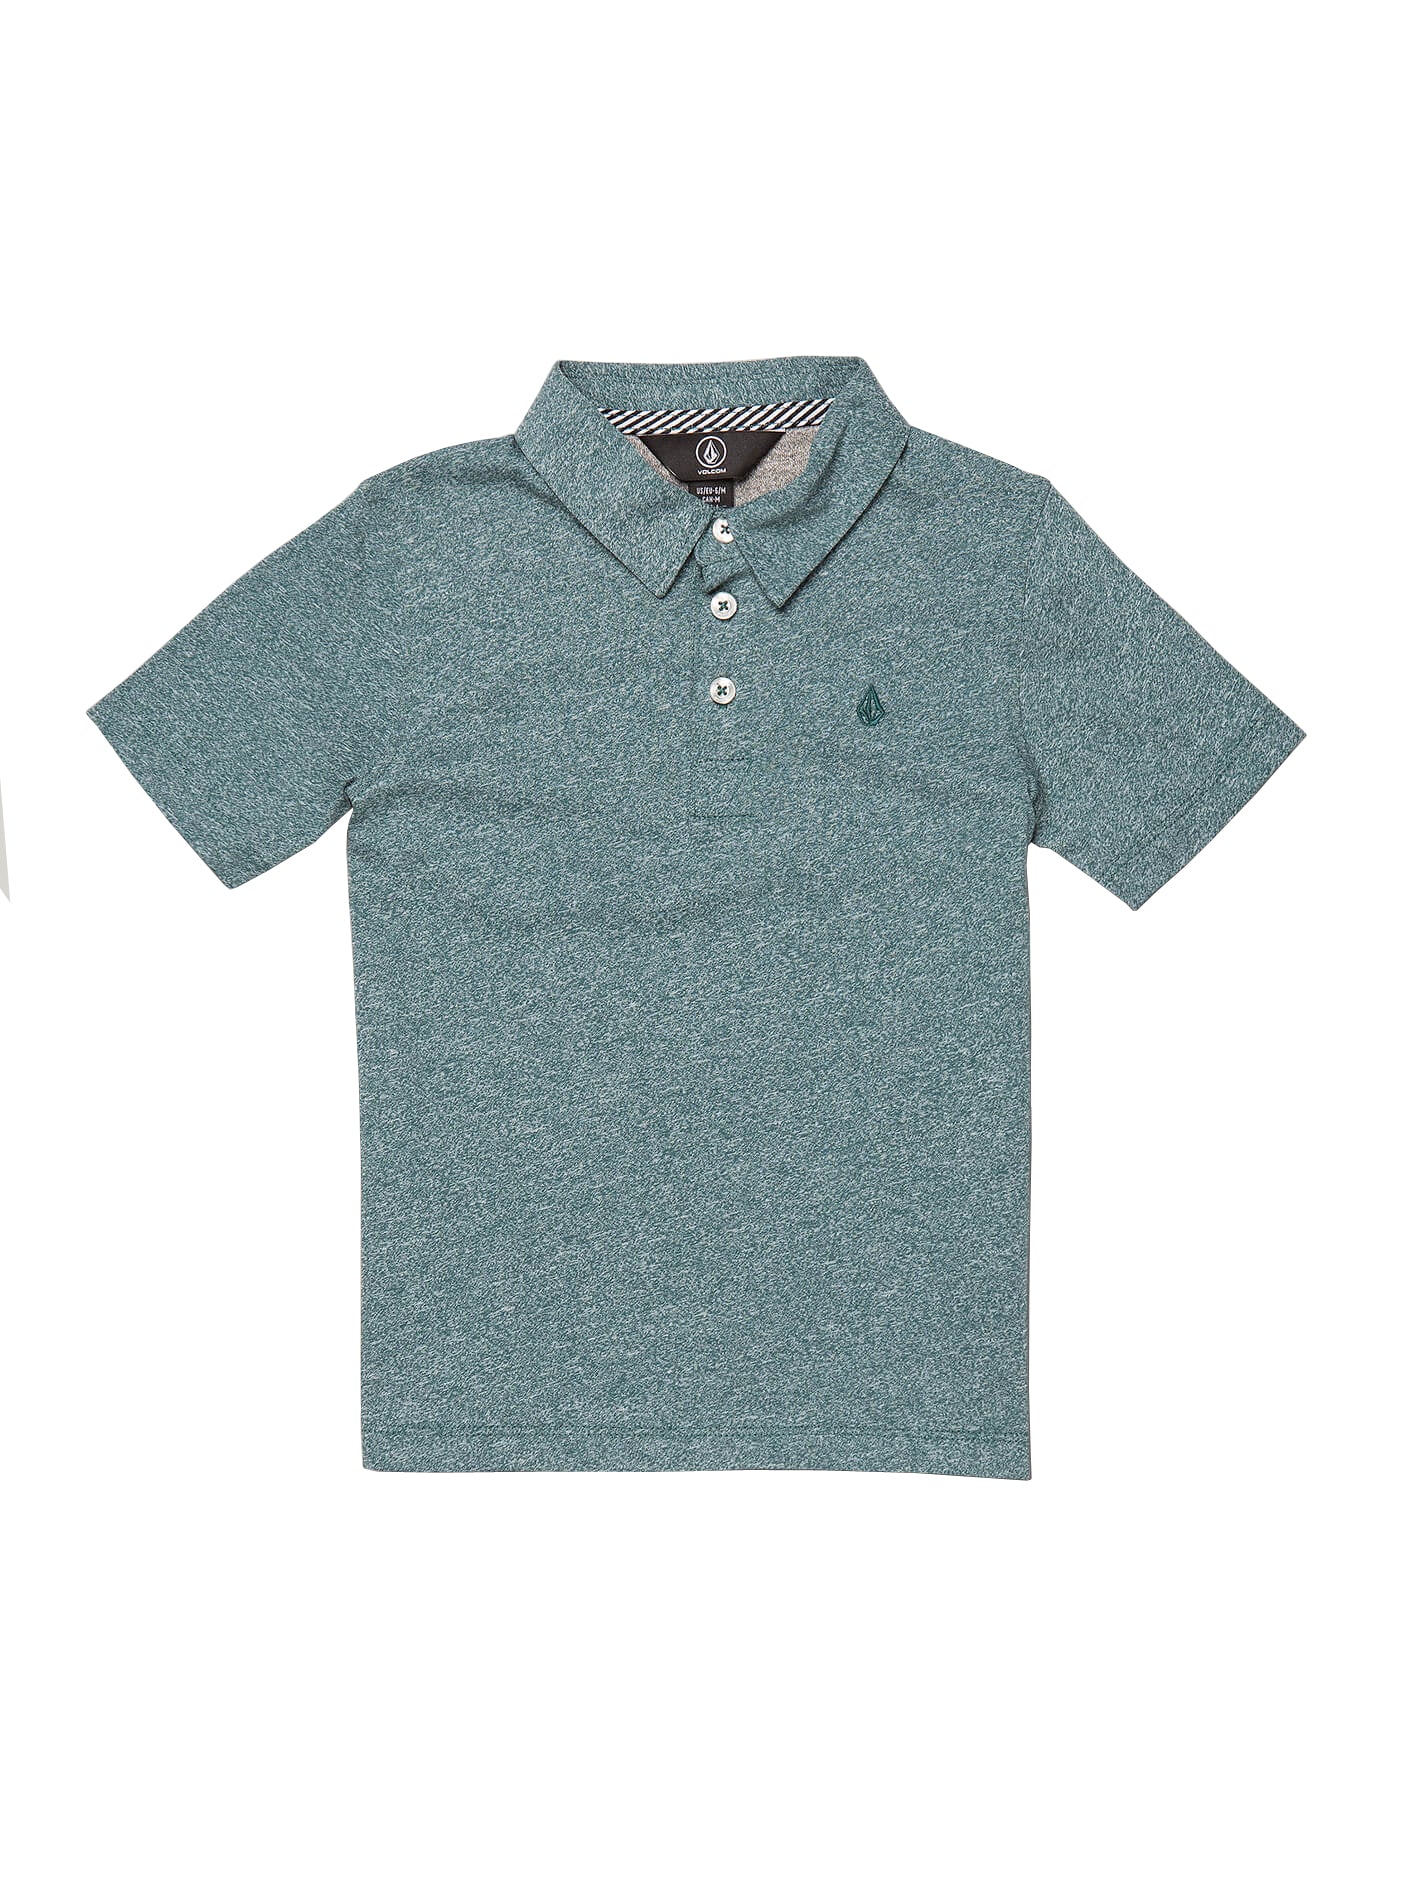 Volcom Wowzer Short Sleeve Kids Polo Shirt HYD 3T